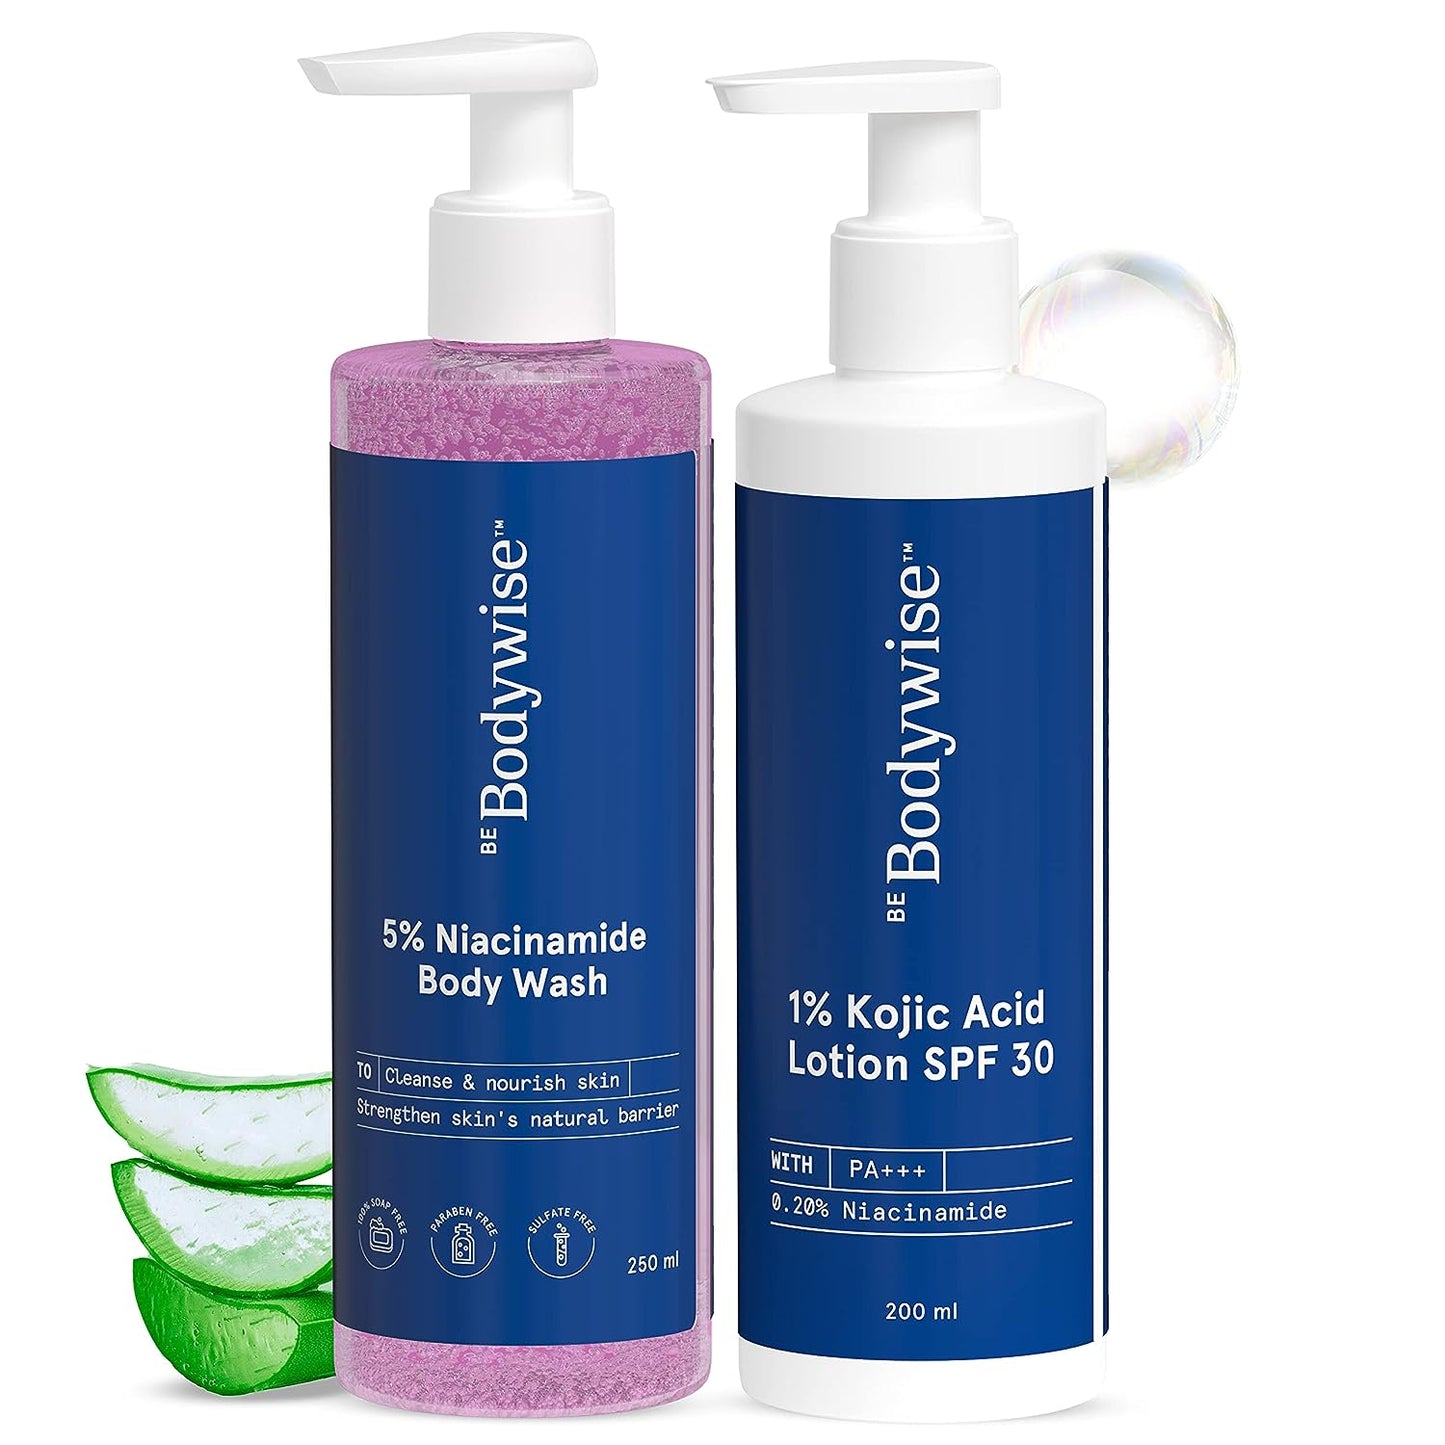 Be Bodywise Body Brightening Kit, 5% Niacinamide Body Wash & 1% Kojic Acid SPF 30 Body Lotion, 450 ml